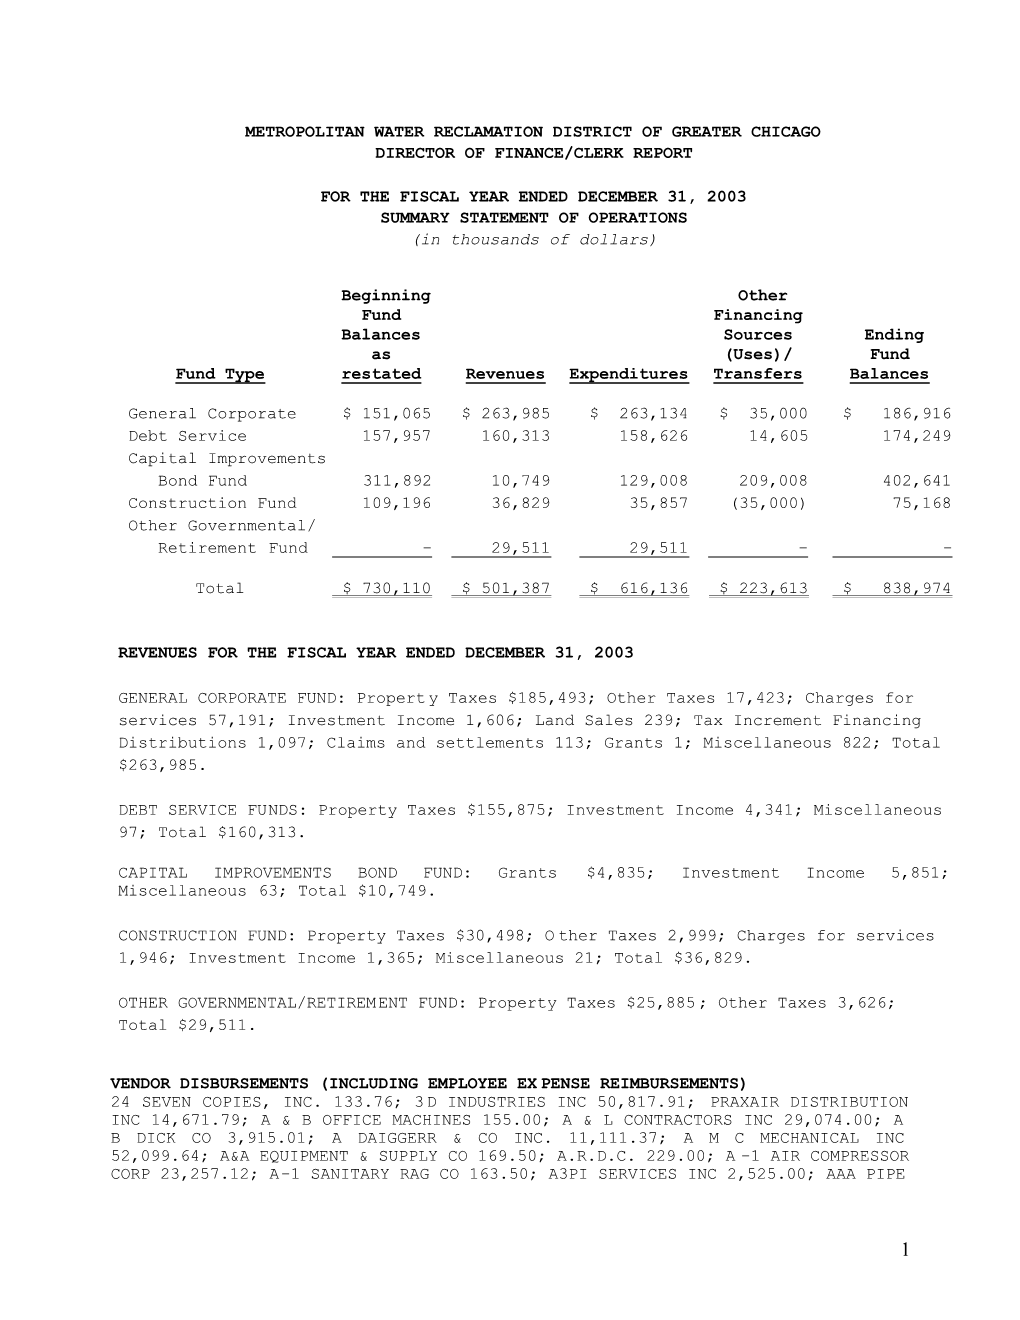 2003 Annual Clerk's Report